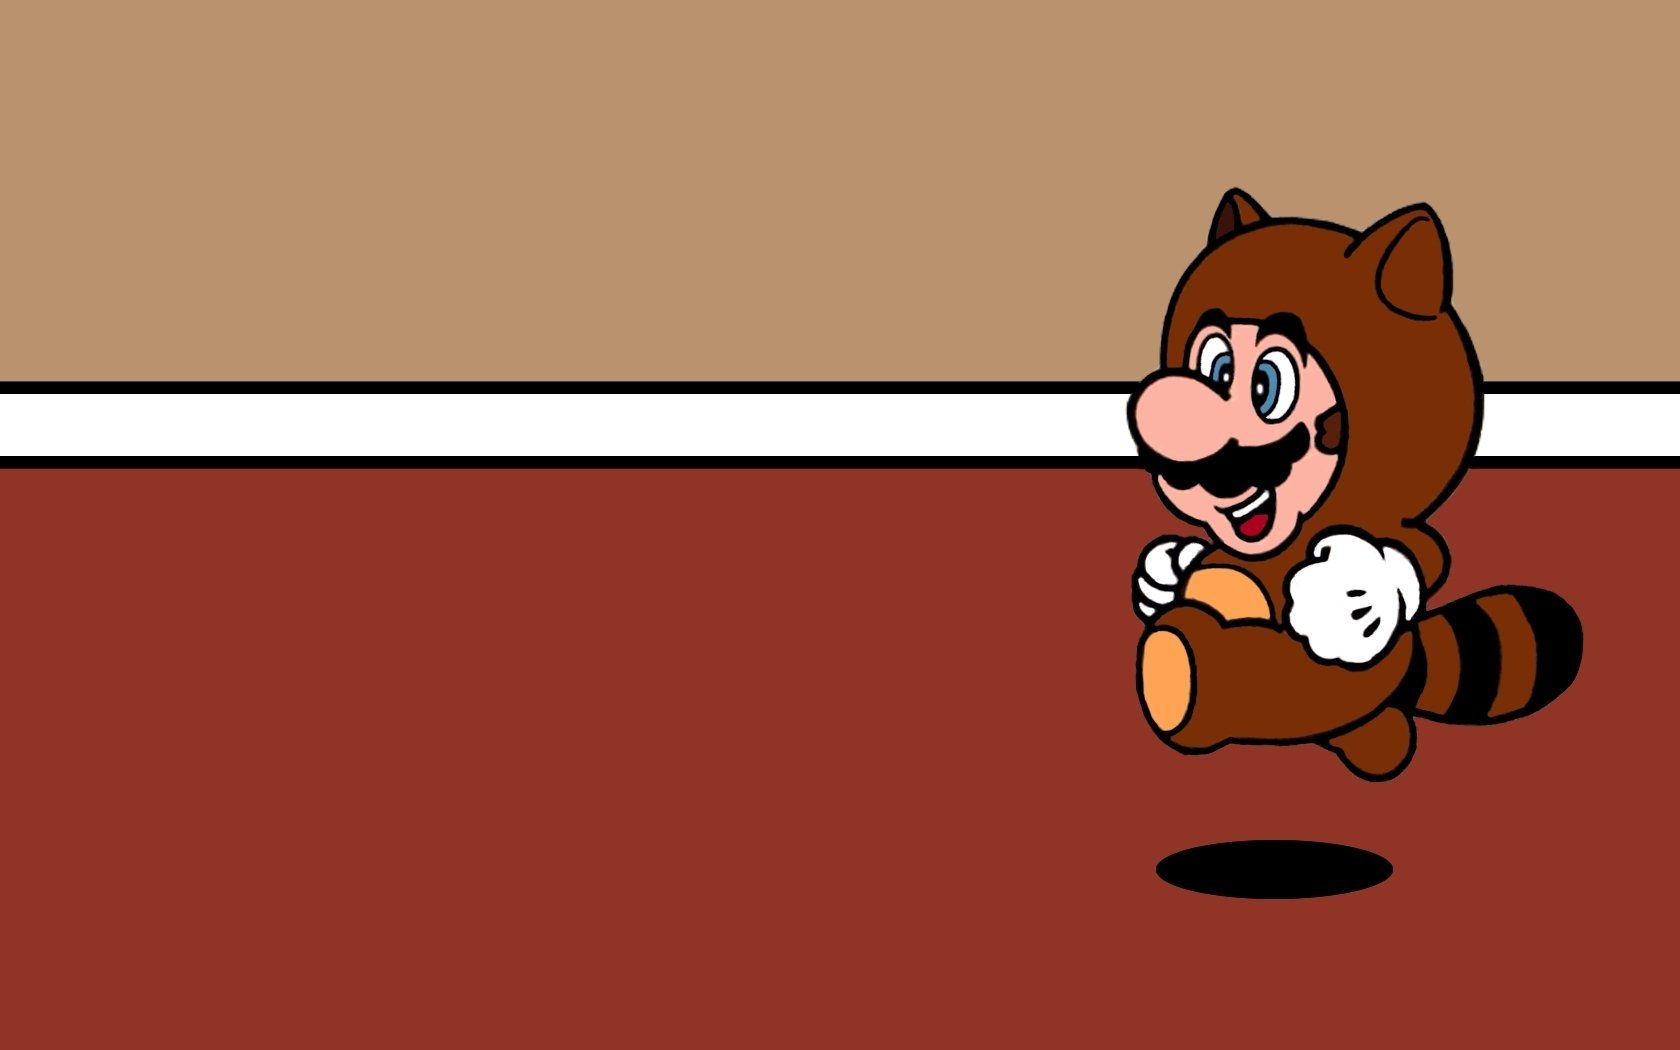 Super Mario Bros. 3 Wallpaper and Background Imagex1050